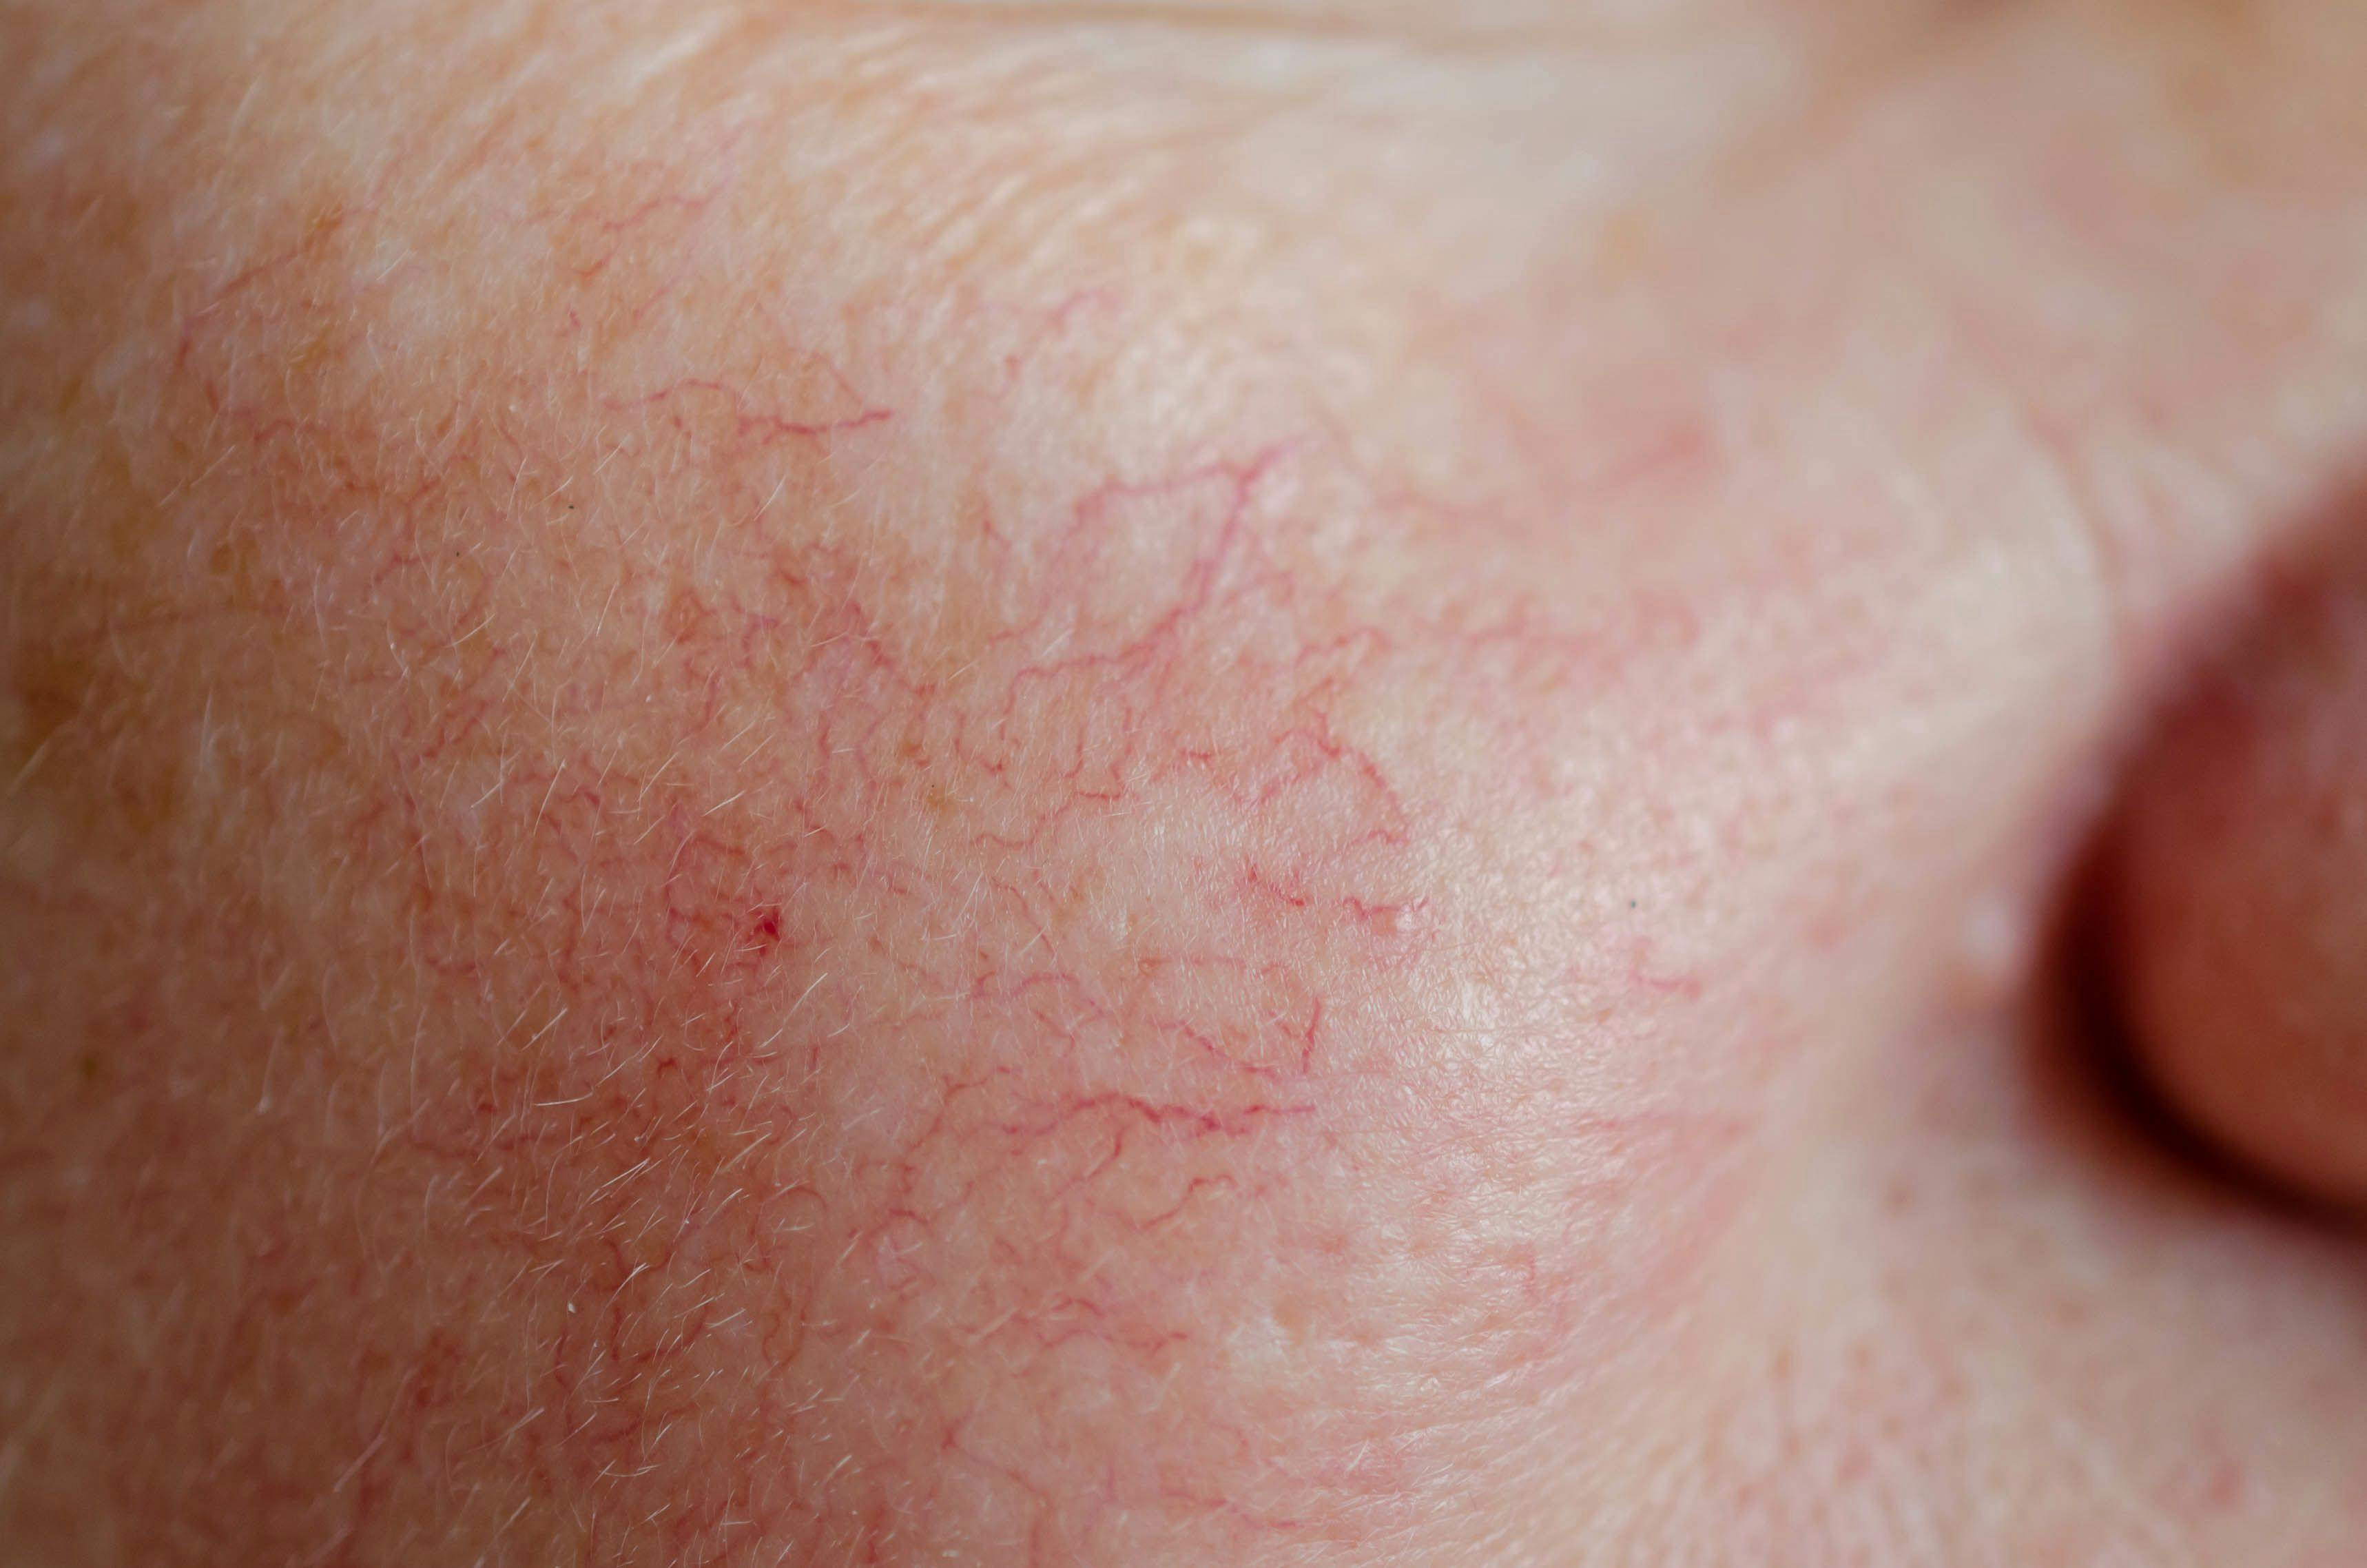 Patient with rosacea on cheeks | Image Credit: © Svetlana - stock.adobe.com